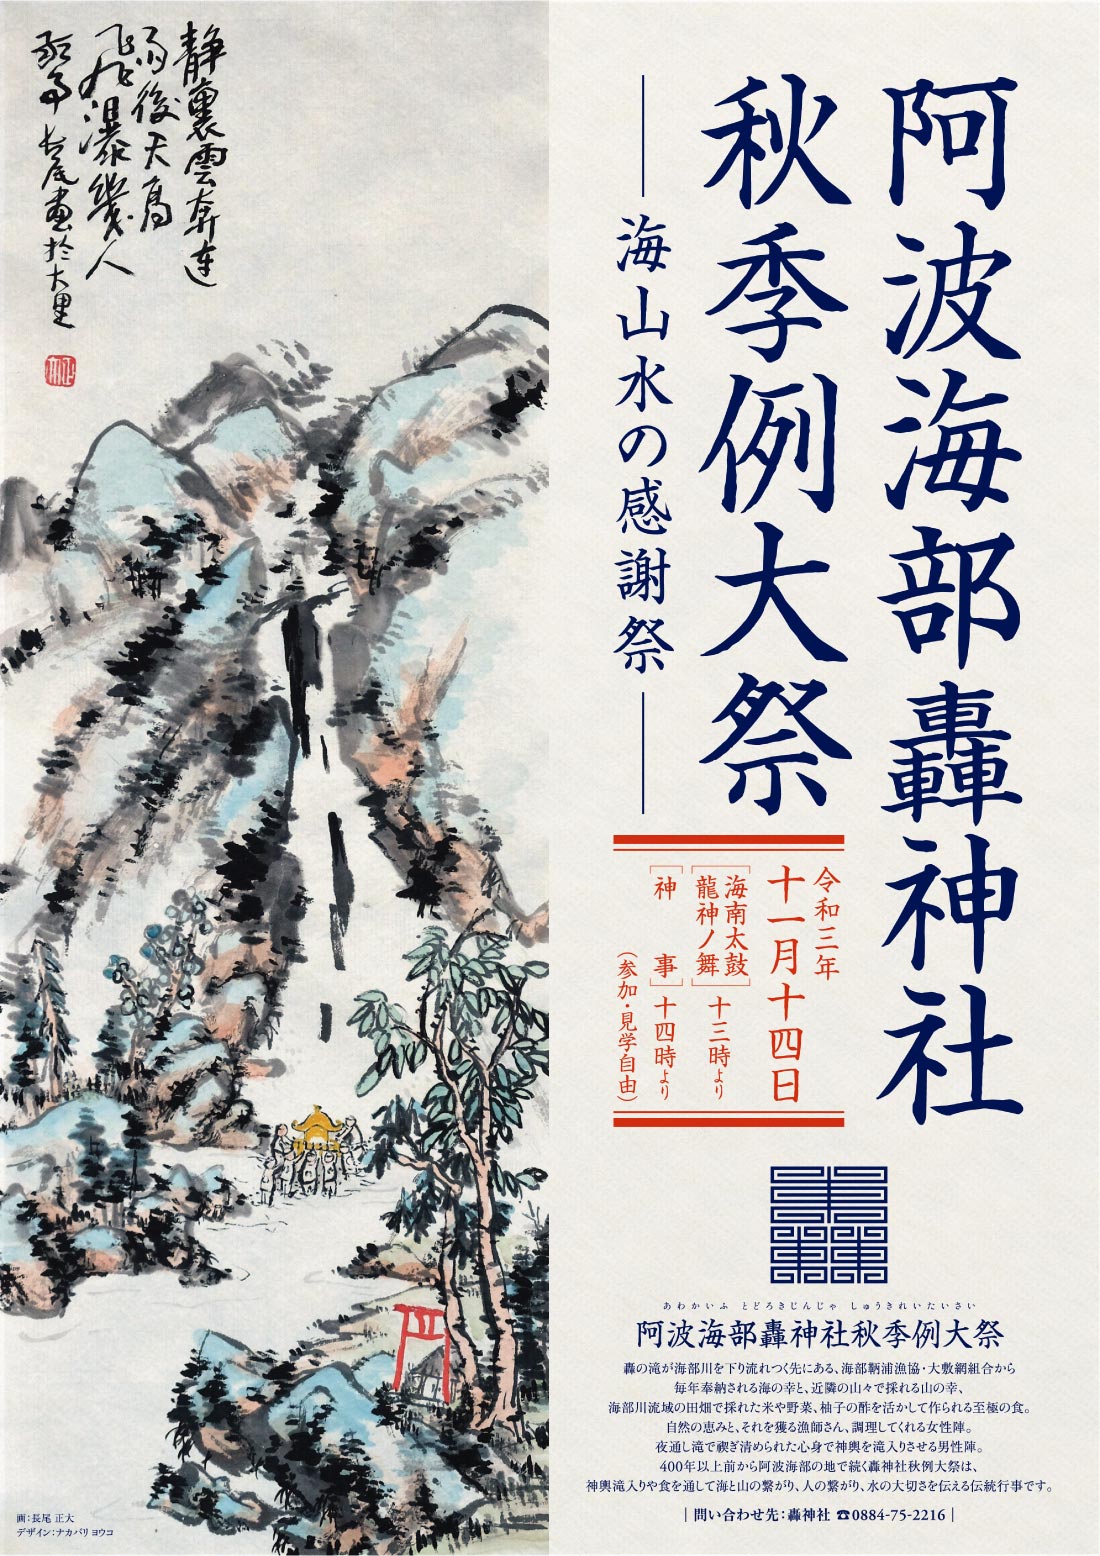 Poster of Reitaisai